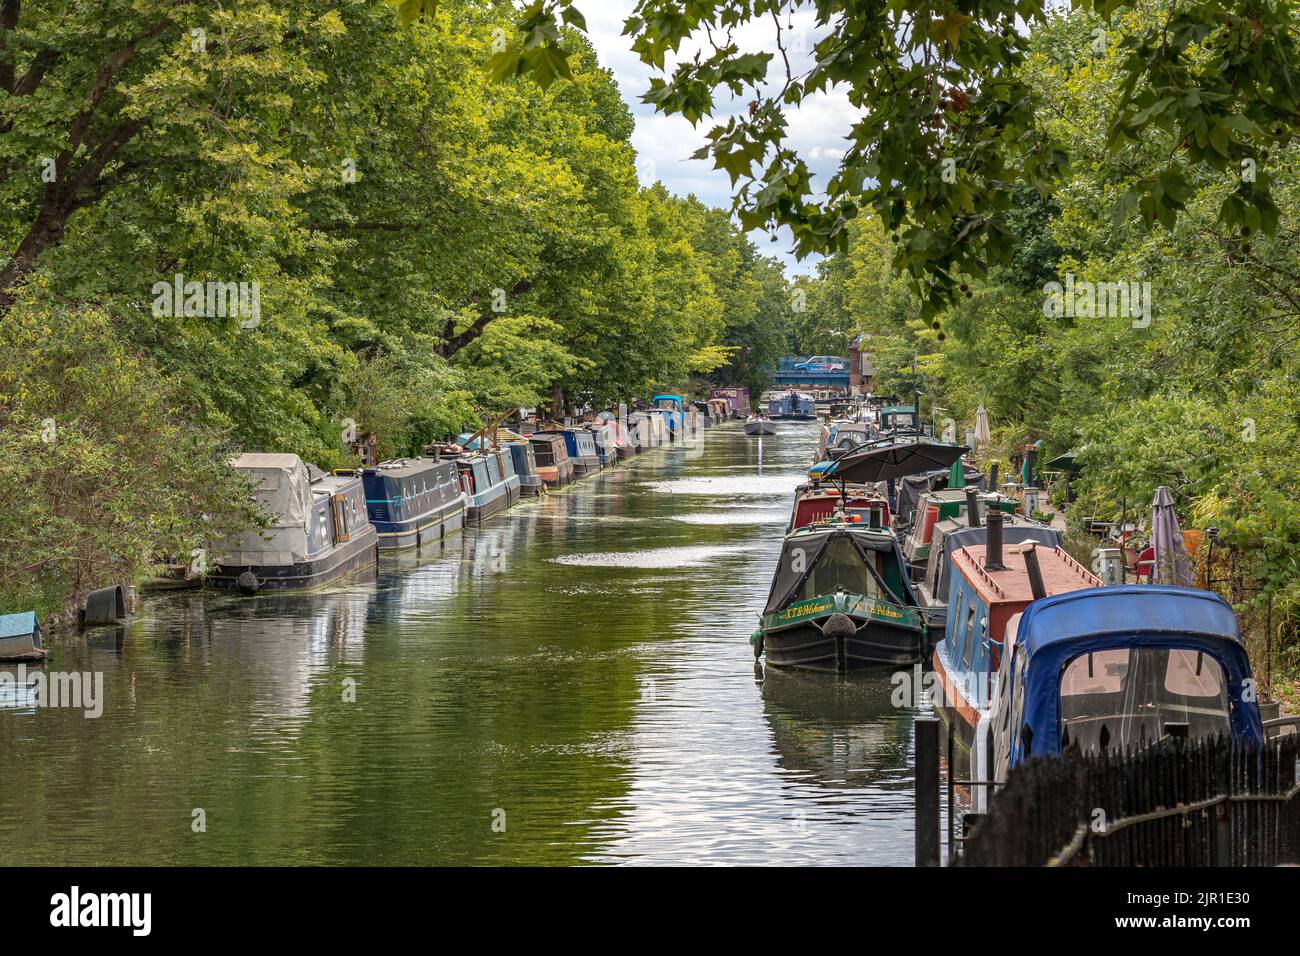 A long line of narrow boats moored along the banks of the Regents Canal, near Little Venice, running alongside Blomfield Road, Maida Vale, London W9 Stock Photo